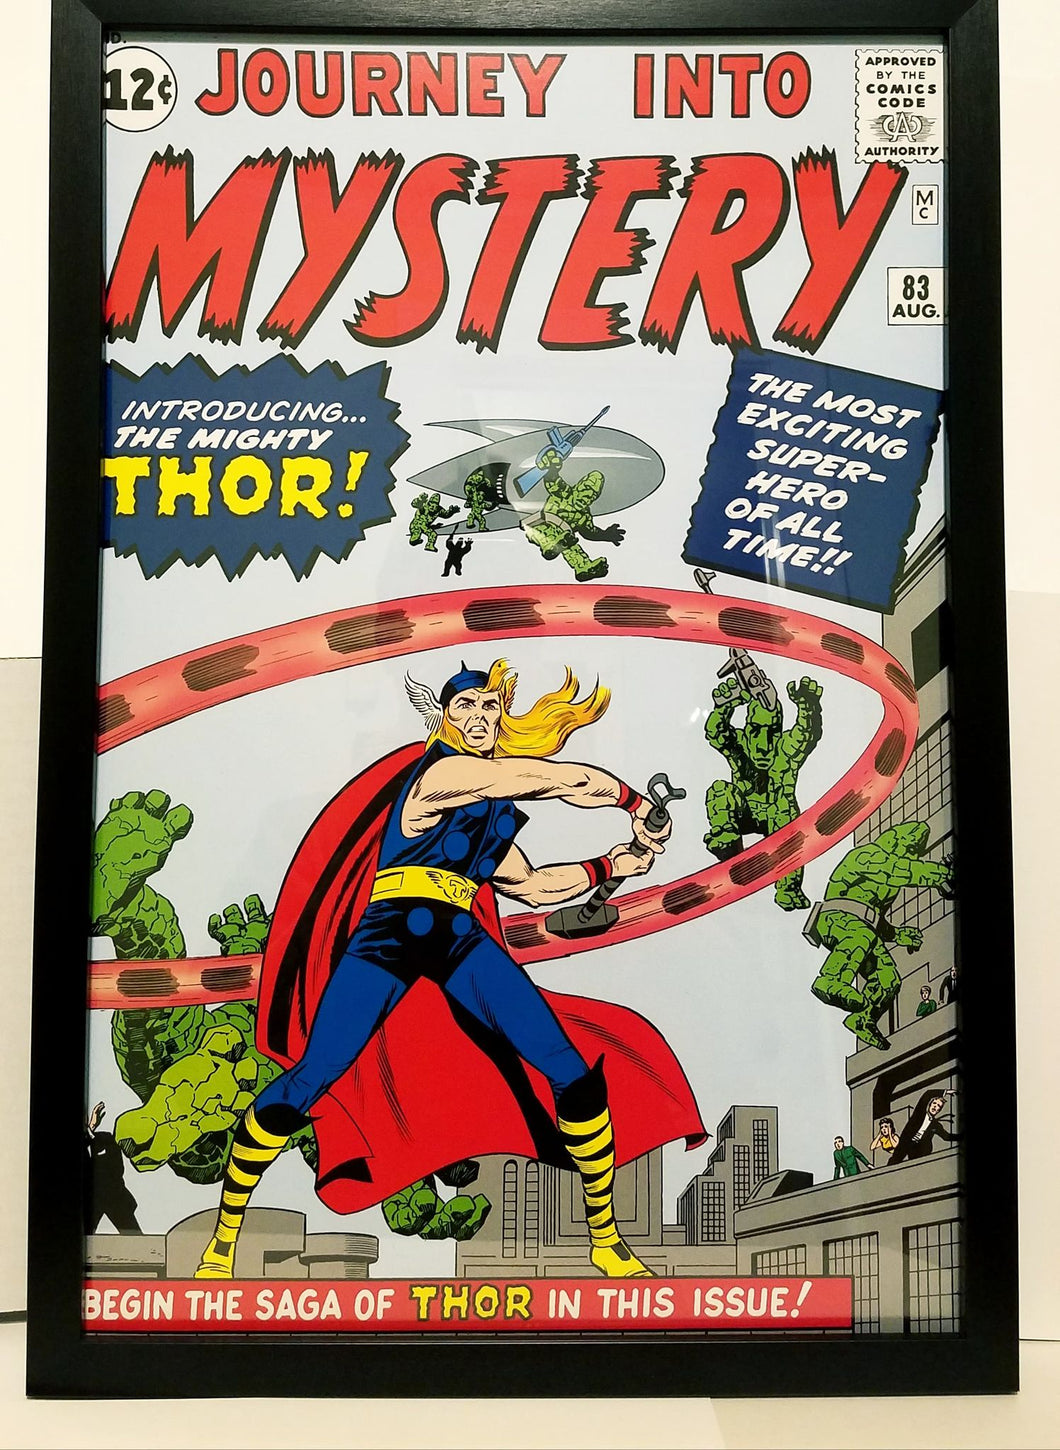 Journey Into Mystery #83 Thor 12x18 FRAMED Marvel Comics Vintage Art Print Poster